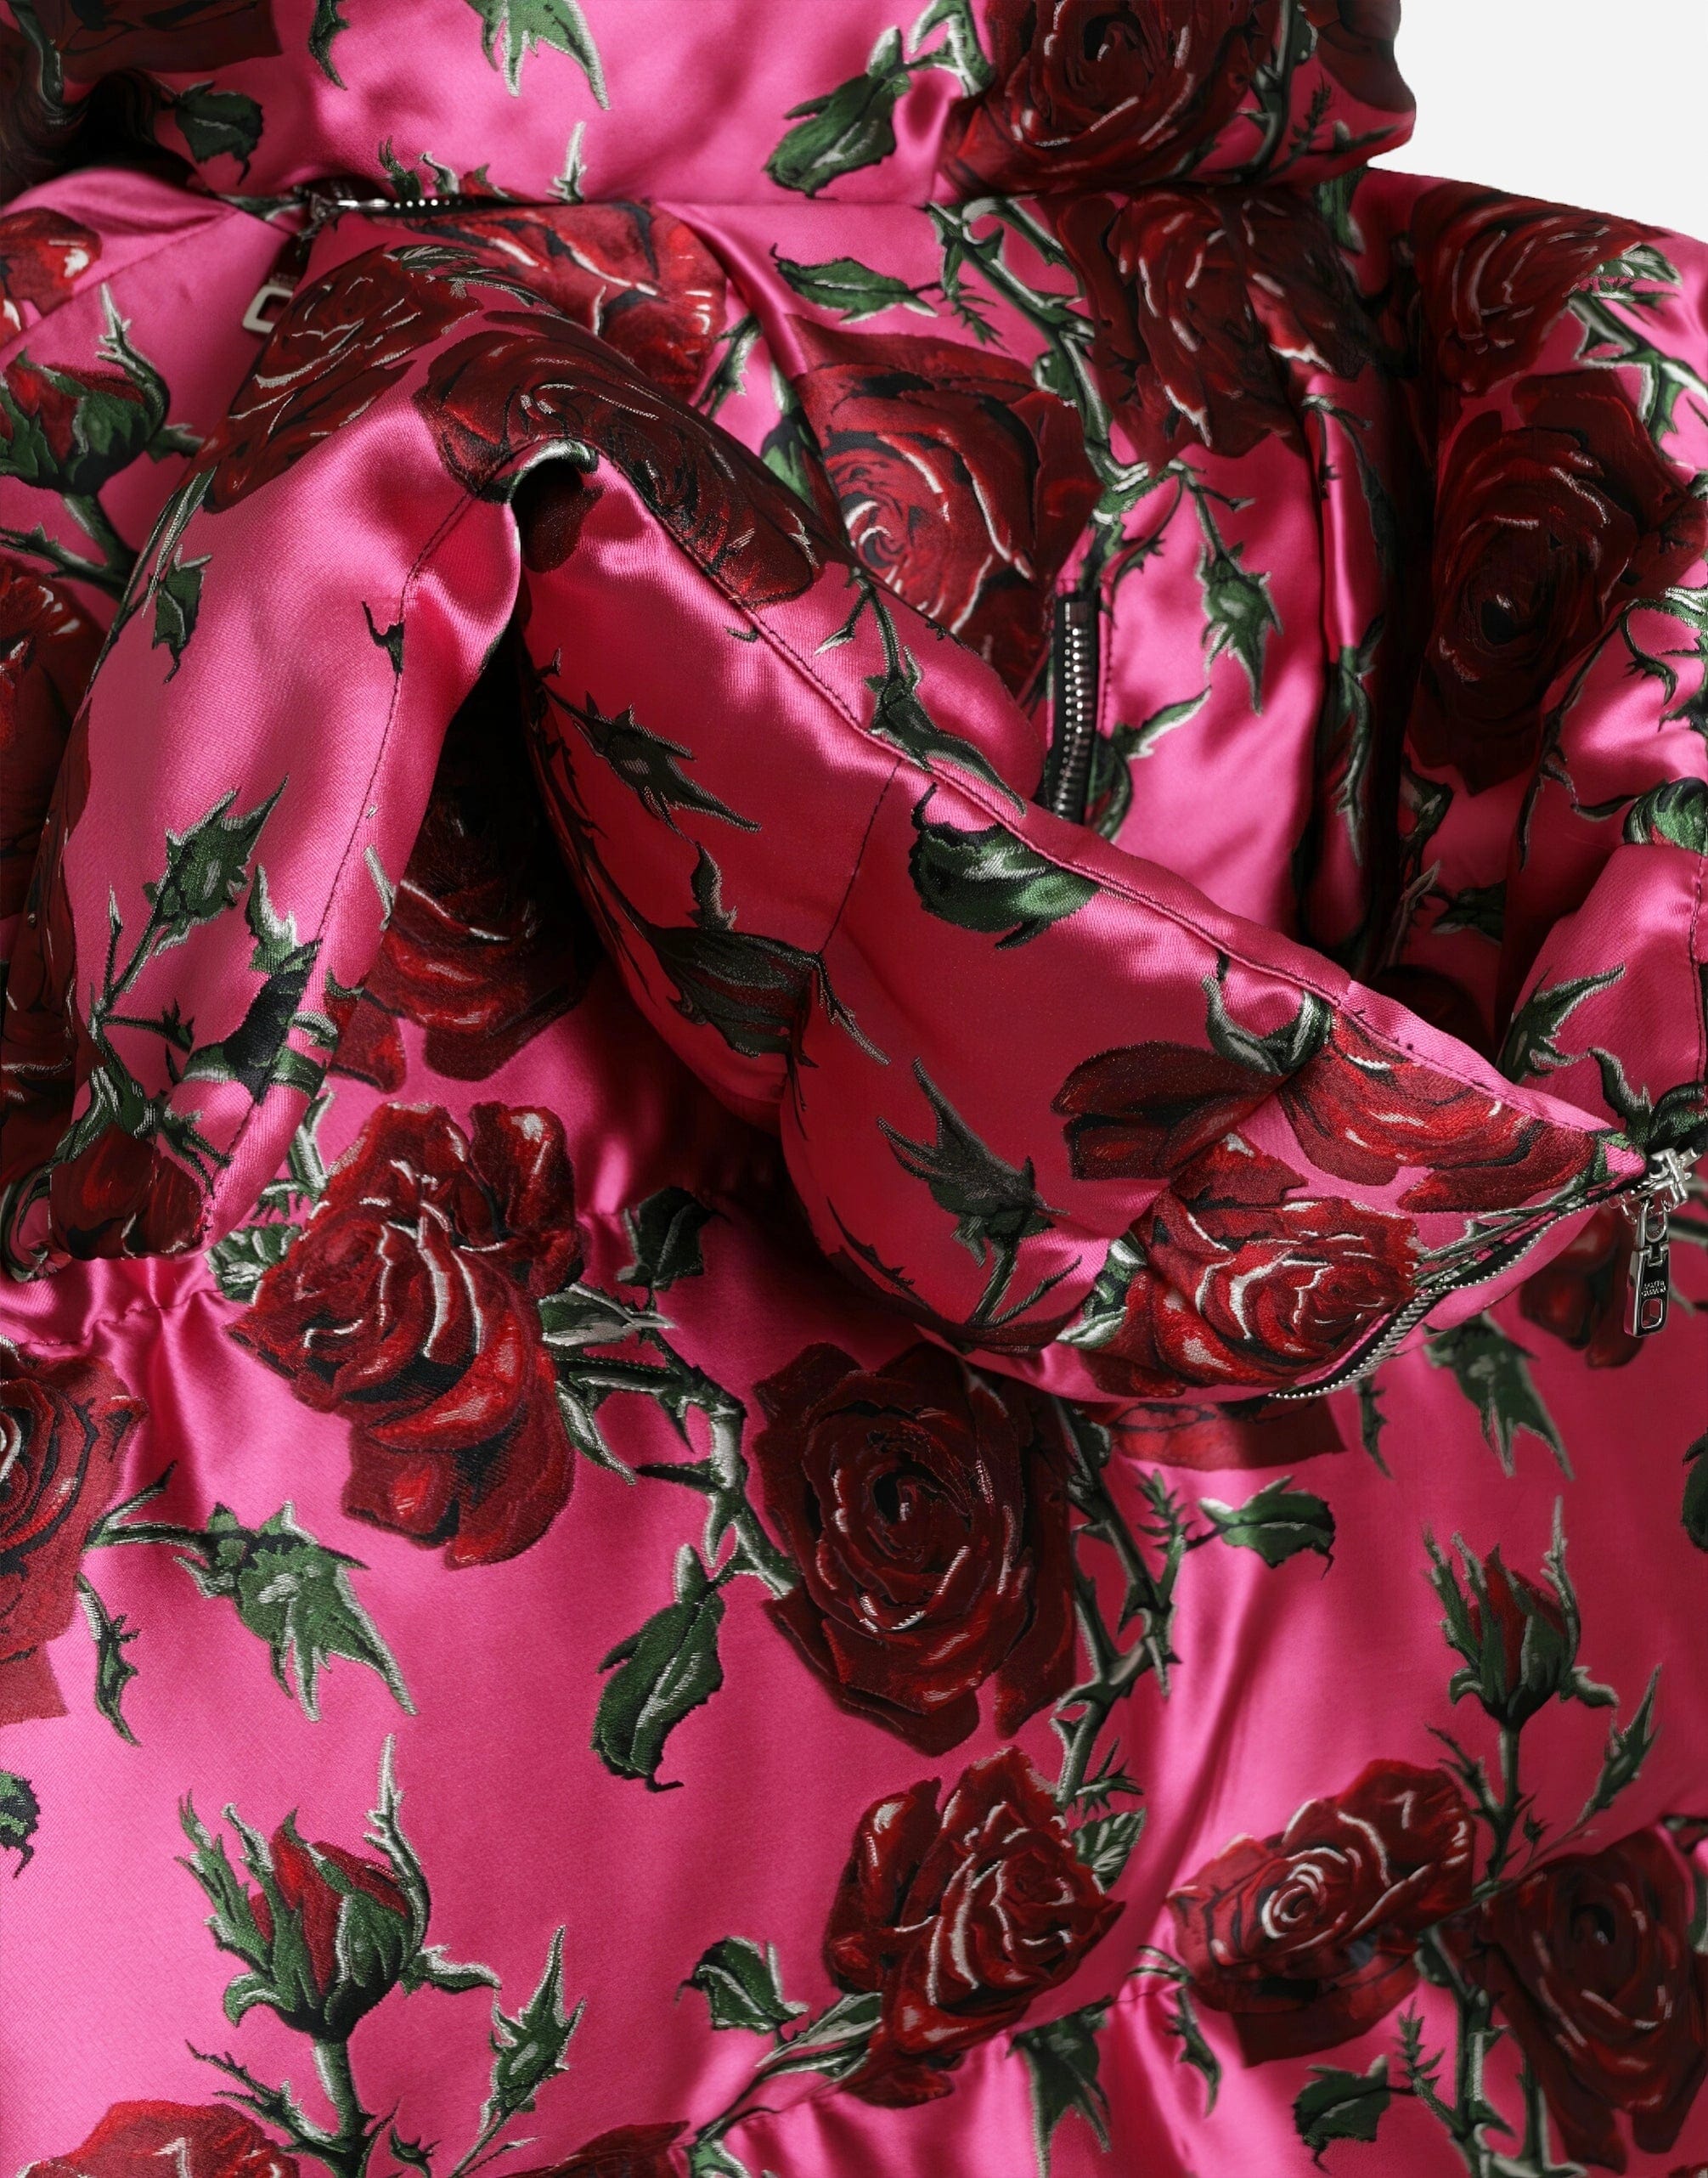 Dolce & Gabbana Oversized Padded Jacket With Rose Embroidery